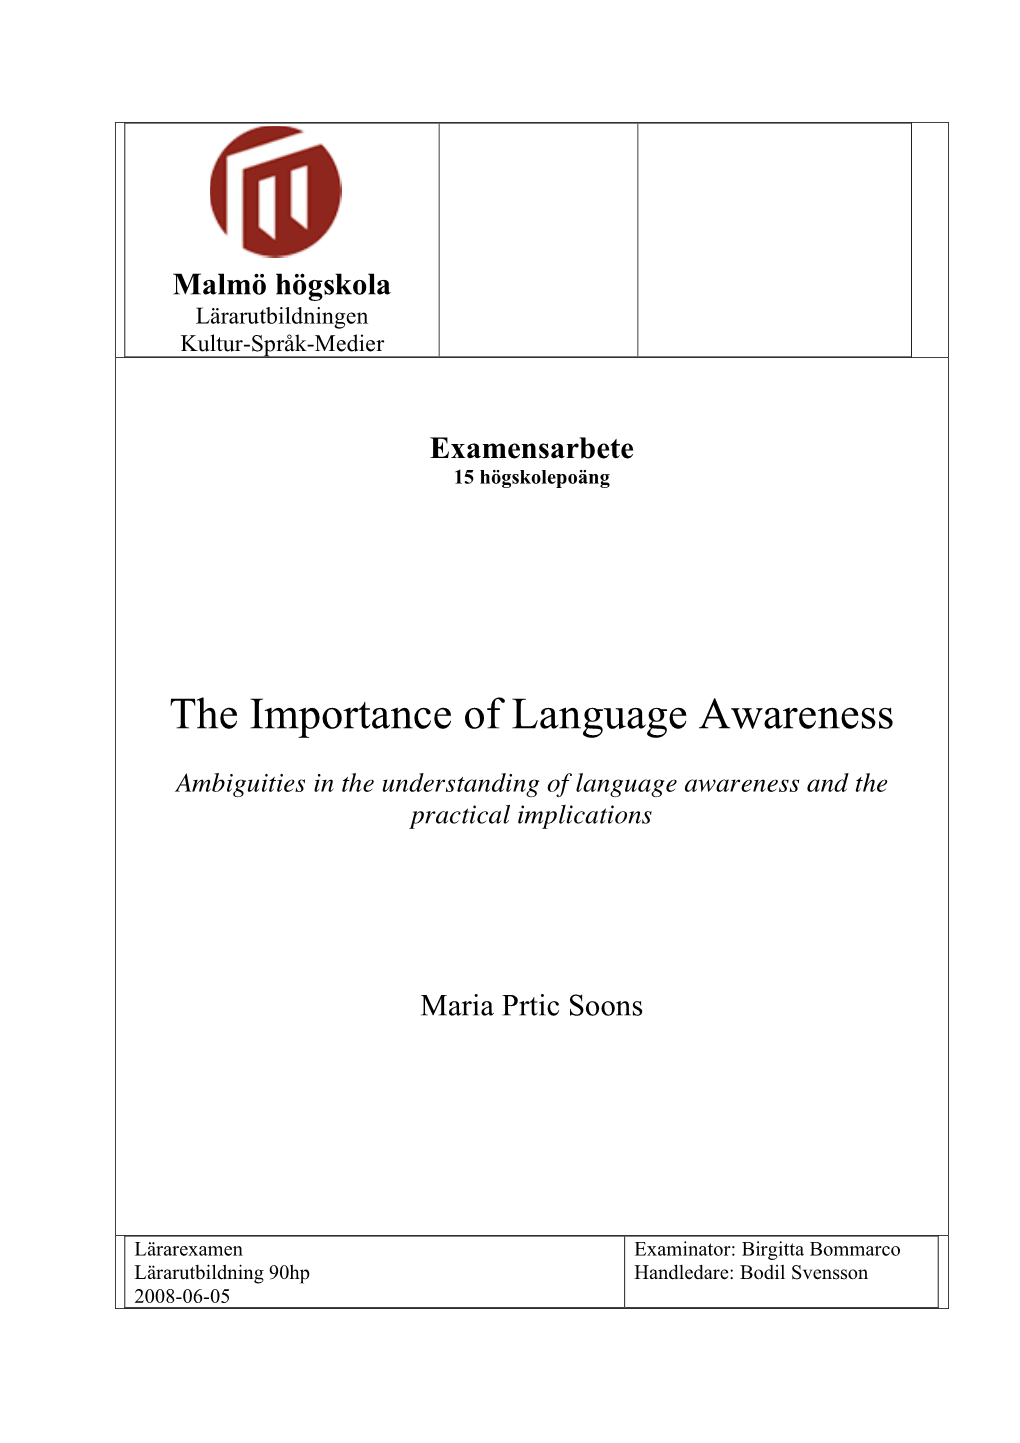 The Importance of Language Awareness